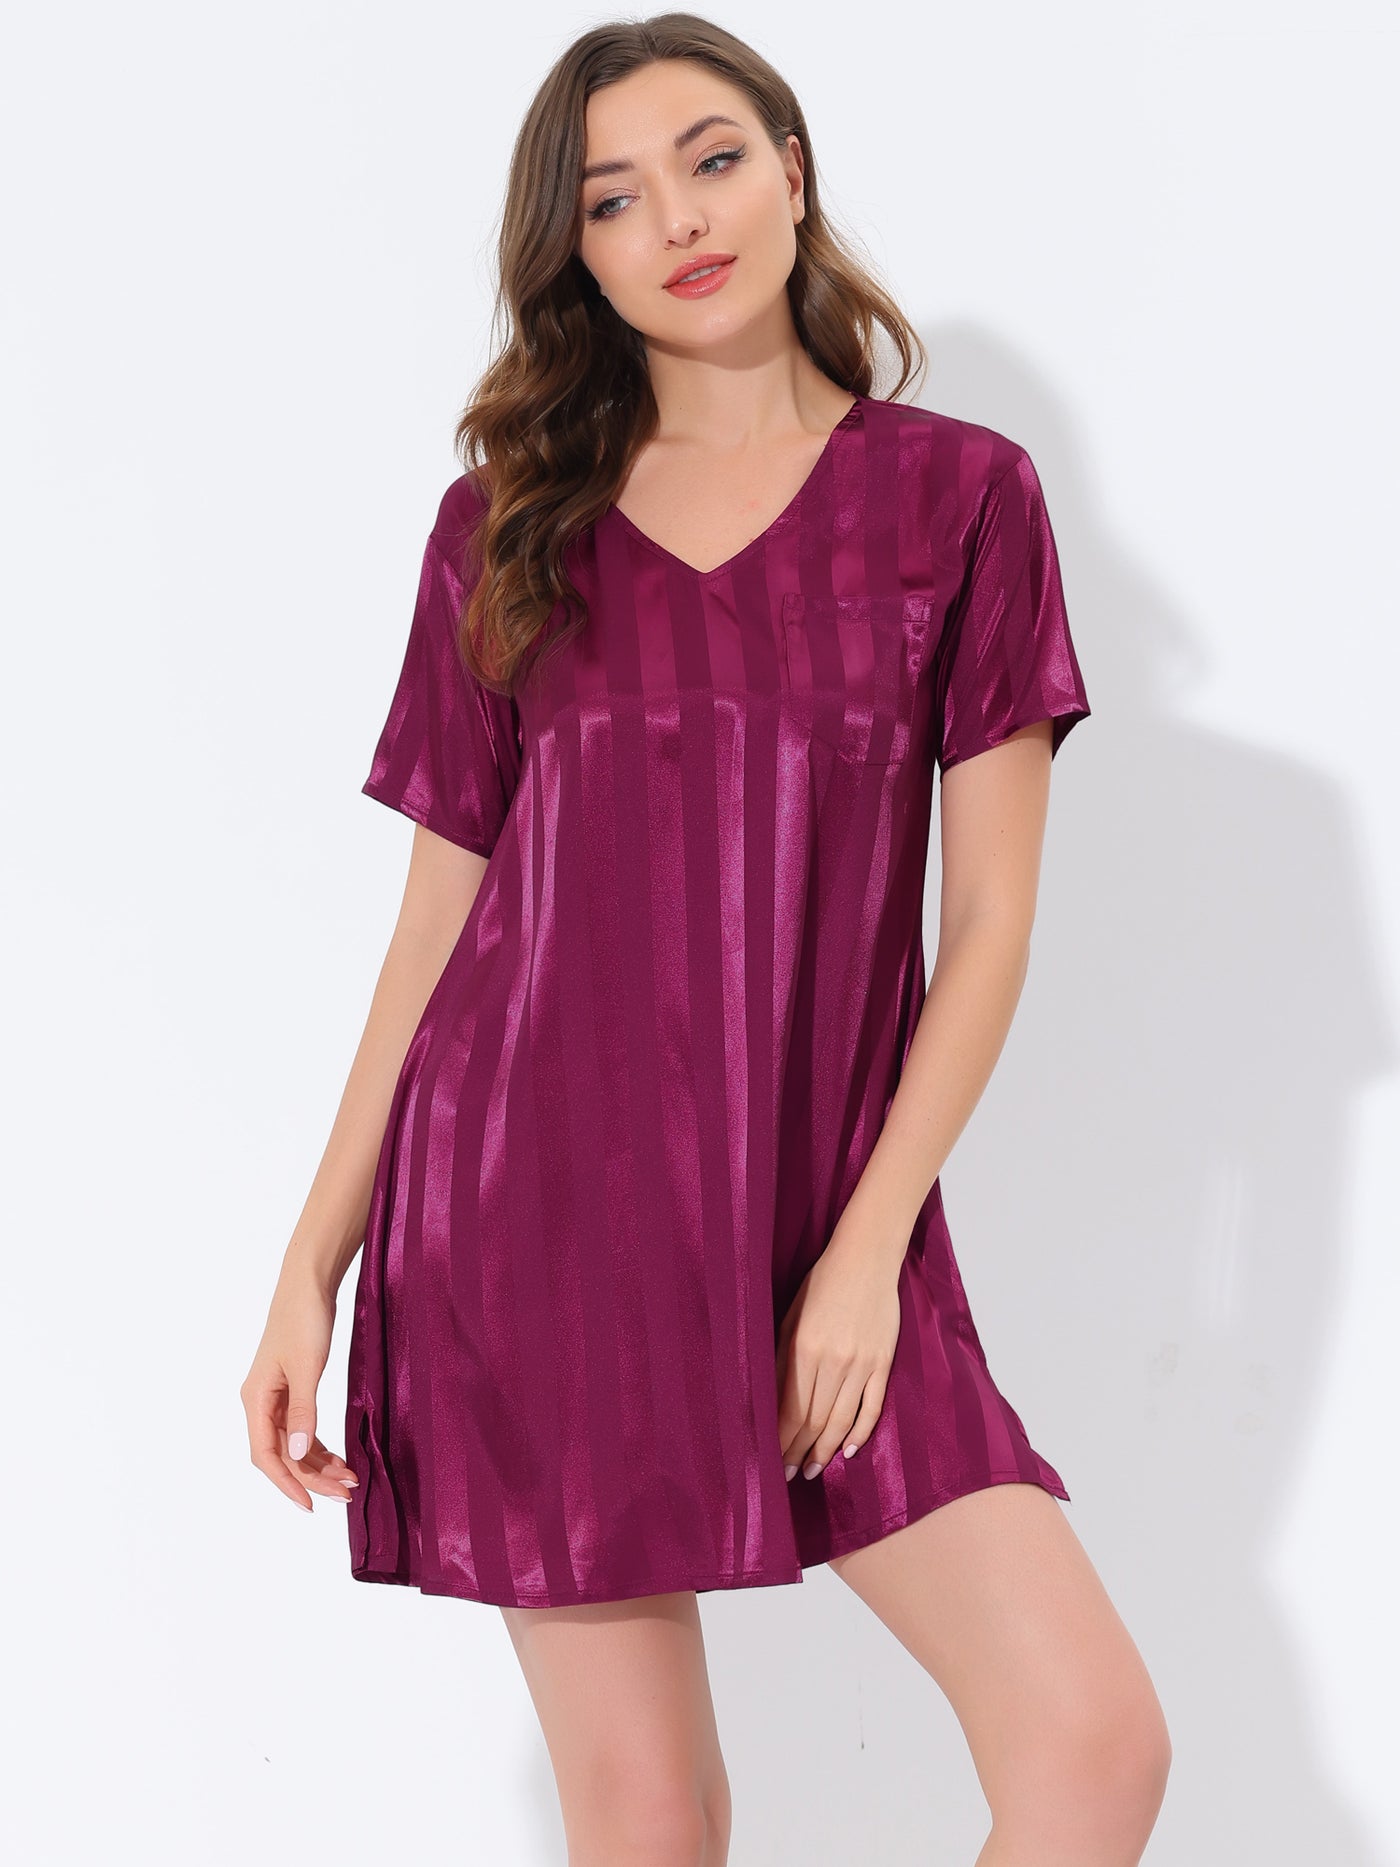 Bublédon Women's Satin Nightshirt Lounge Sleepwear Nightgown